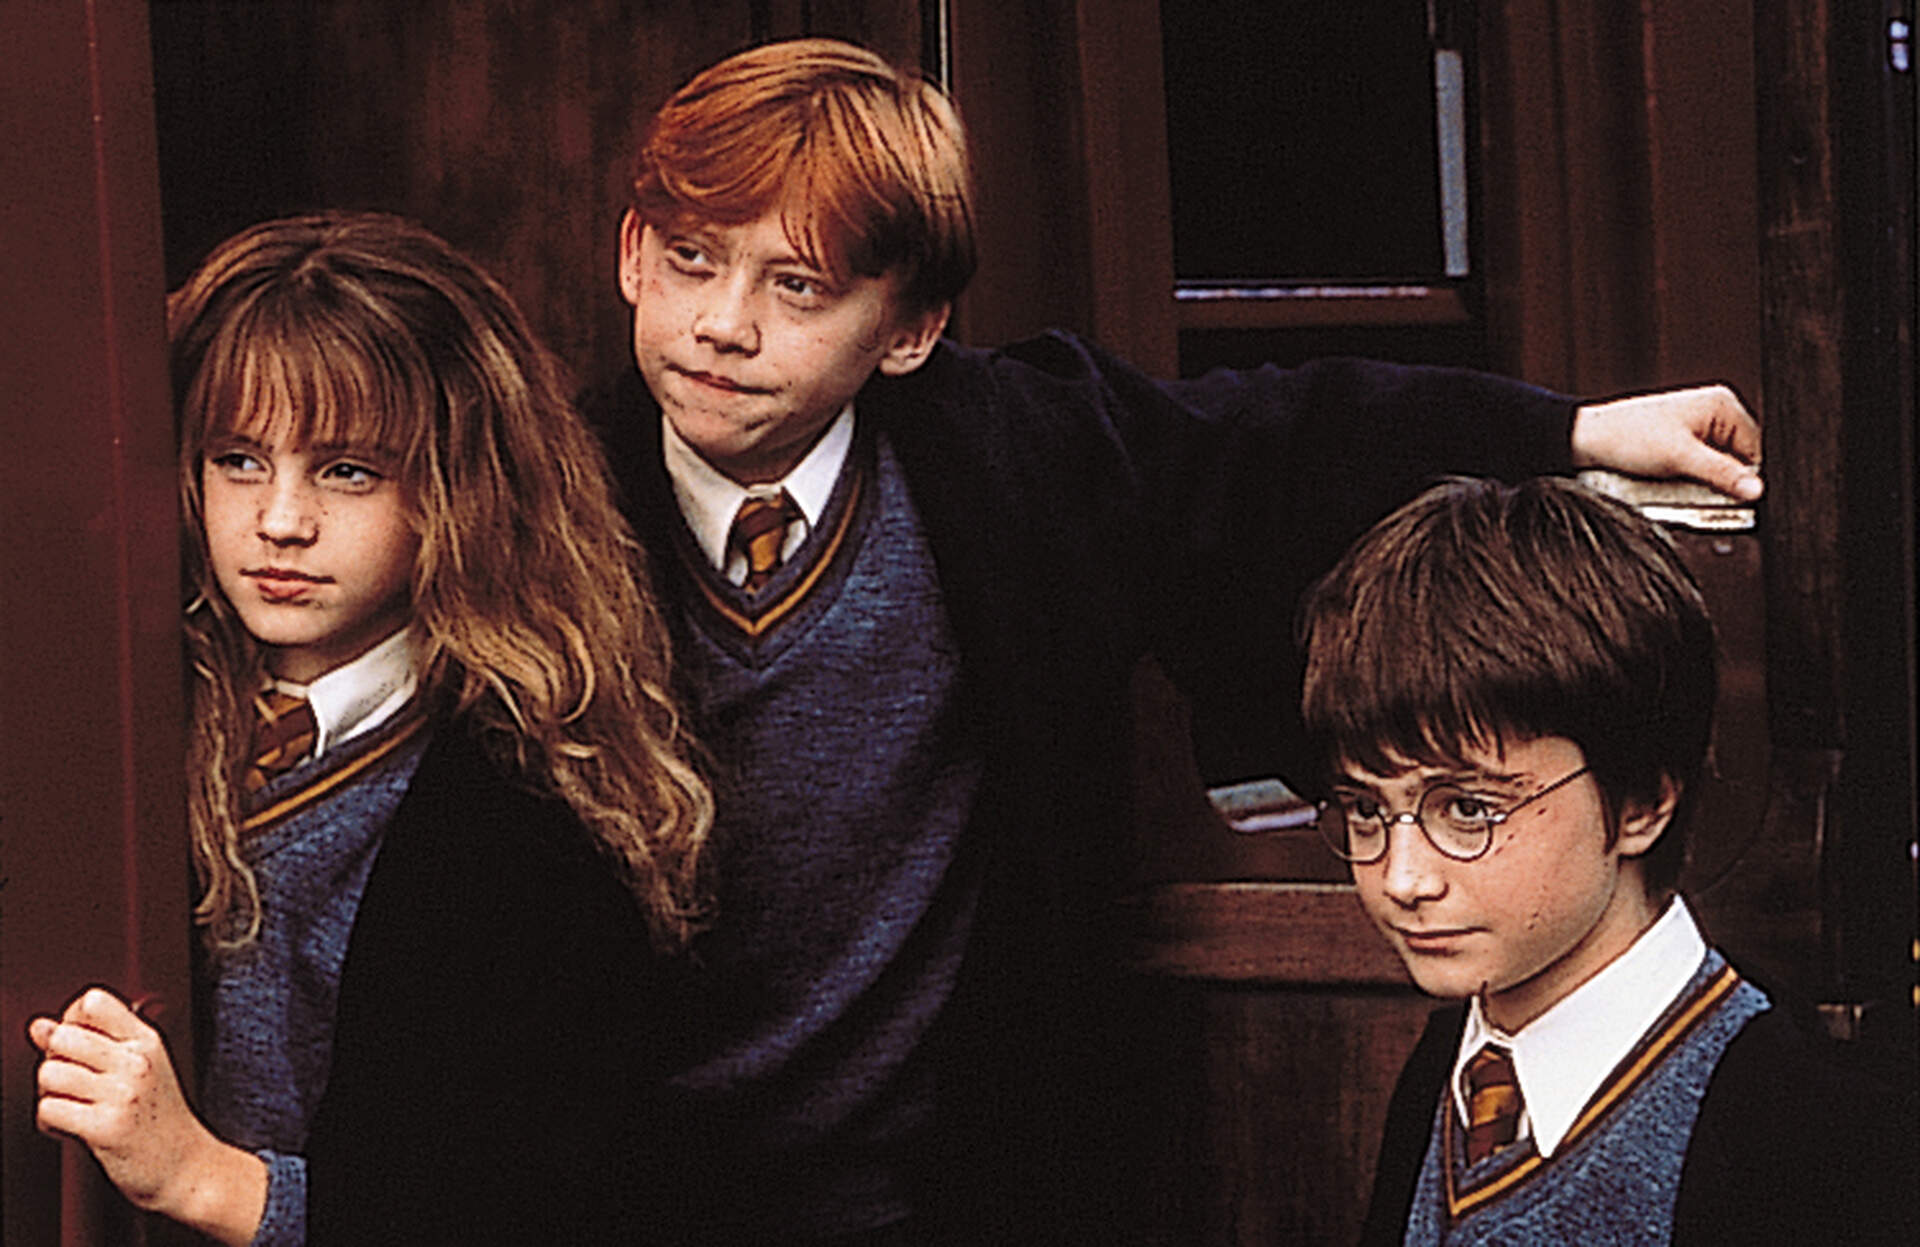 Harry Potter 1 - 20th Anniversary Version - Szenenbild 10 von 18